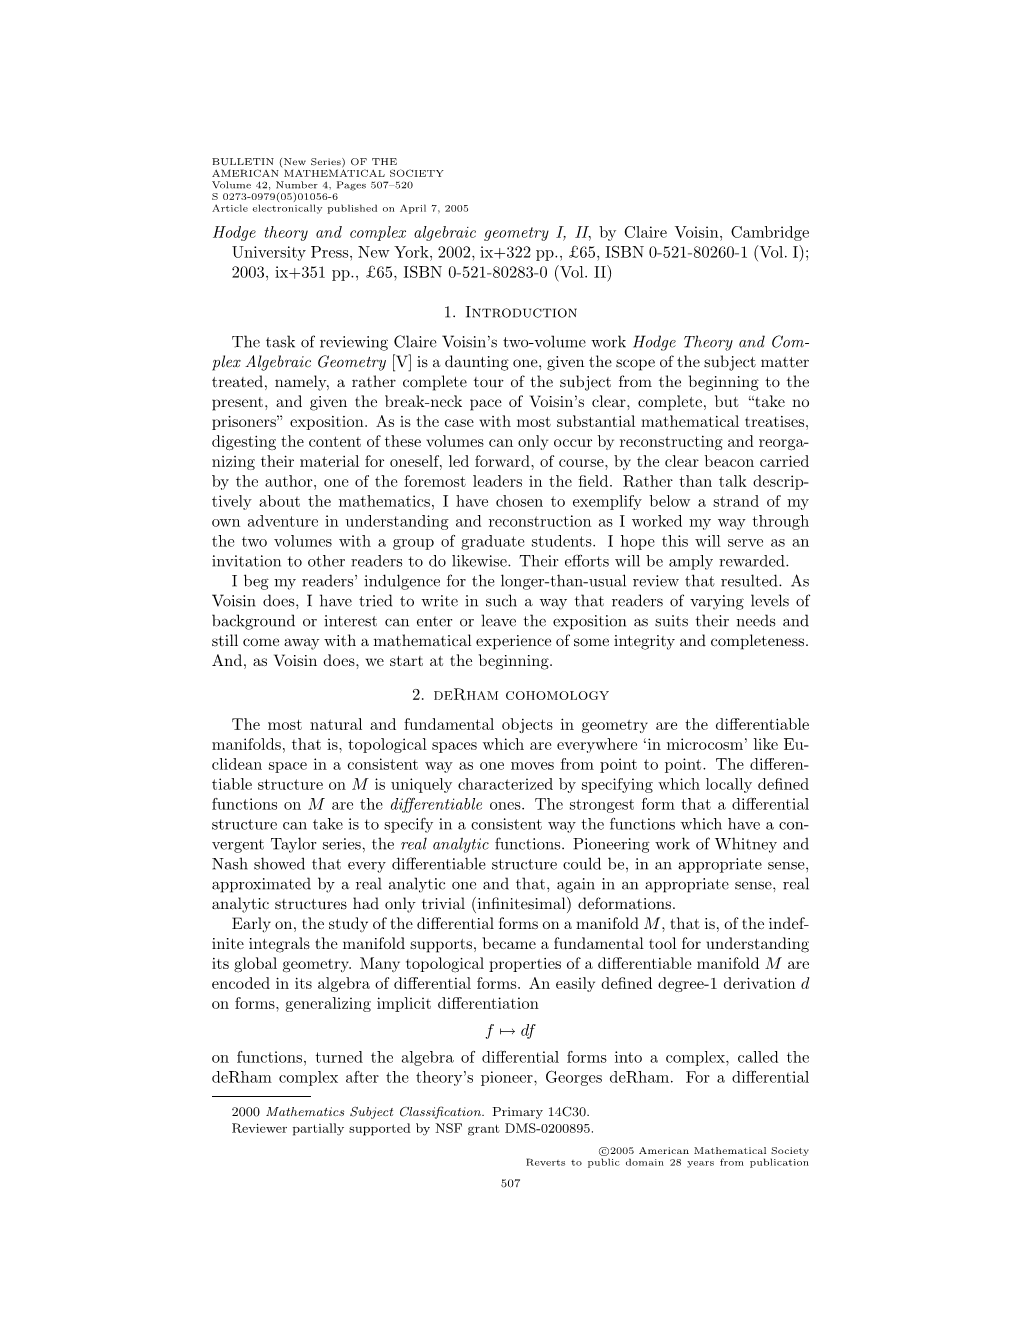 Hodge Theory and Complex Algebraic Geometry I, II, by Claire Voisin, Cambridge University Press, New York, 2002, Ix+322 Pp., £65, ISBN 0-521-80260-1 (Vol